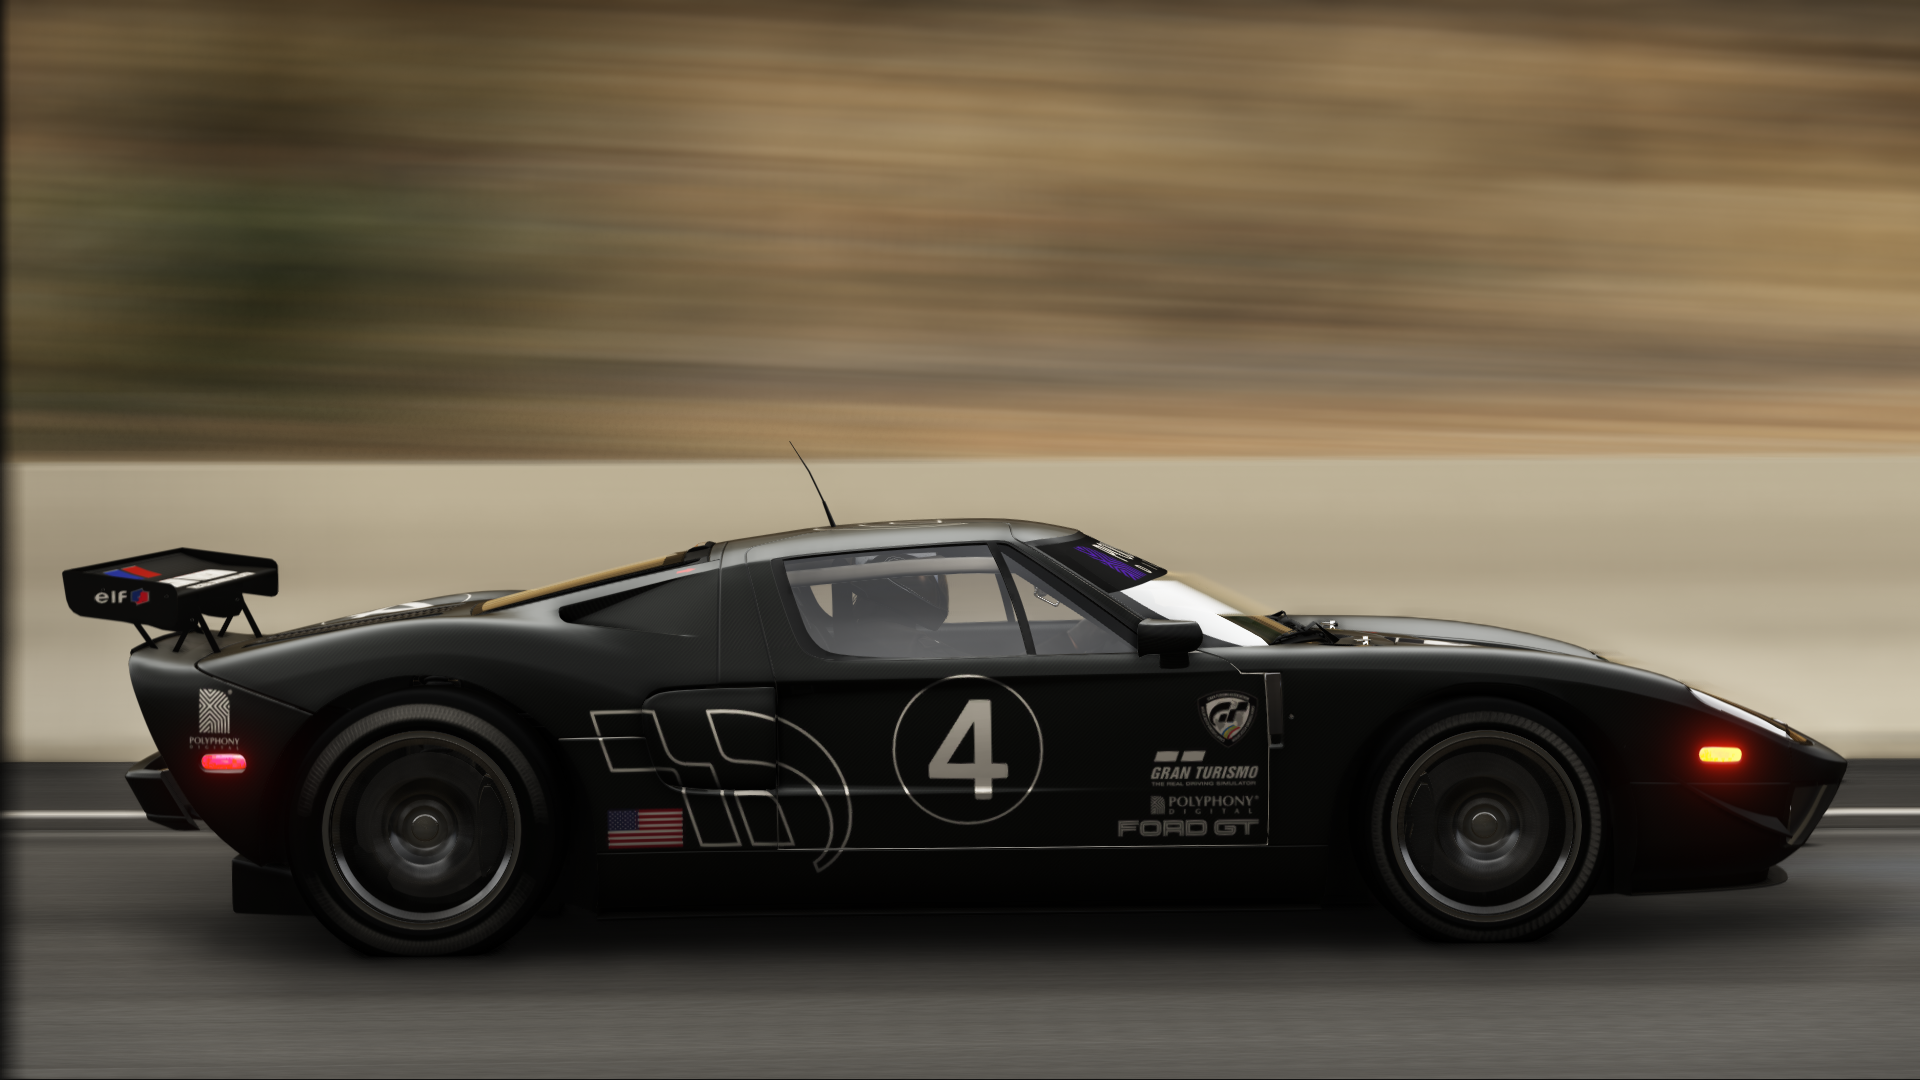 Oficina Steam::Gran Turismo 4 Ford GT LM Race Car Spec ll Skin